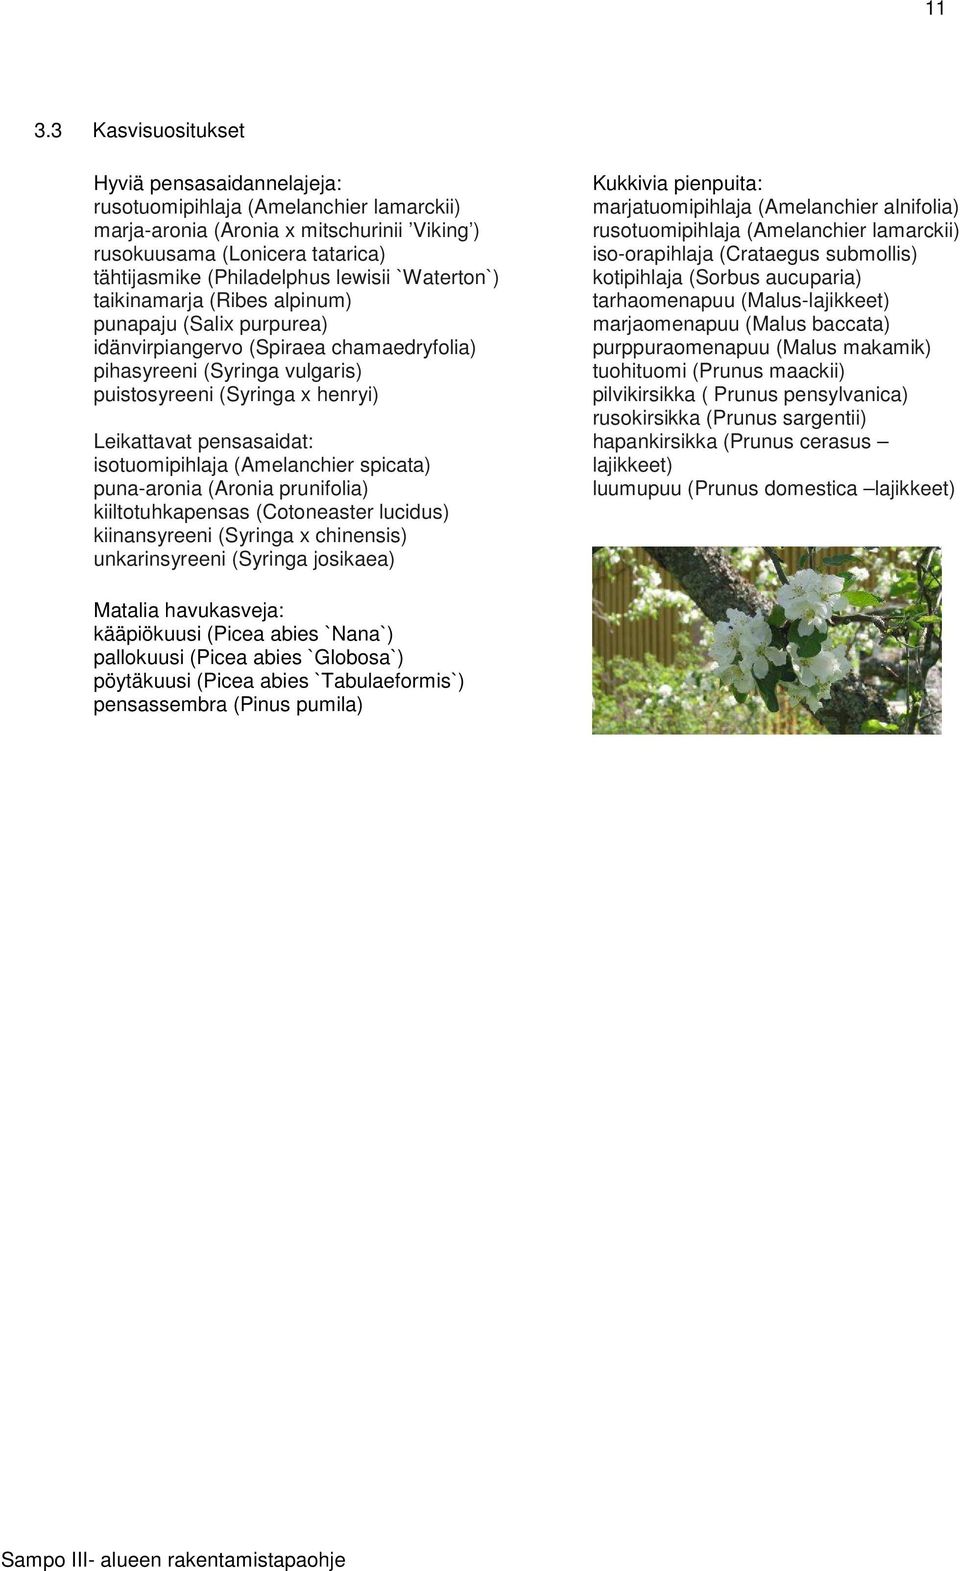 pensasaidat: isotuomipihlaja (Amelanchier spicata) puna-aronia (Aronia prunifolia) kiiltotuhkapensas (Cotoneaster lucidus) kiinansyreeni (Syringa x chinensis) unkarinsyreeni (Syringa josikaea)